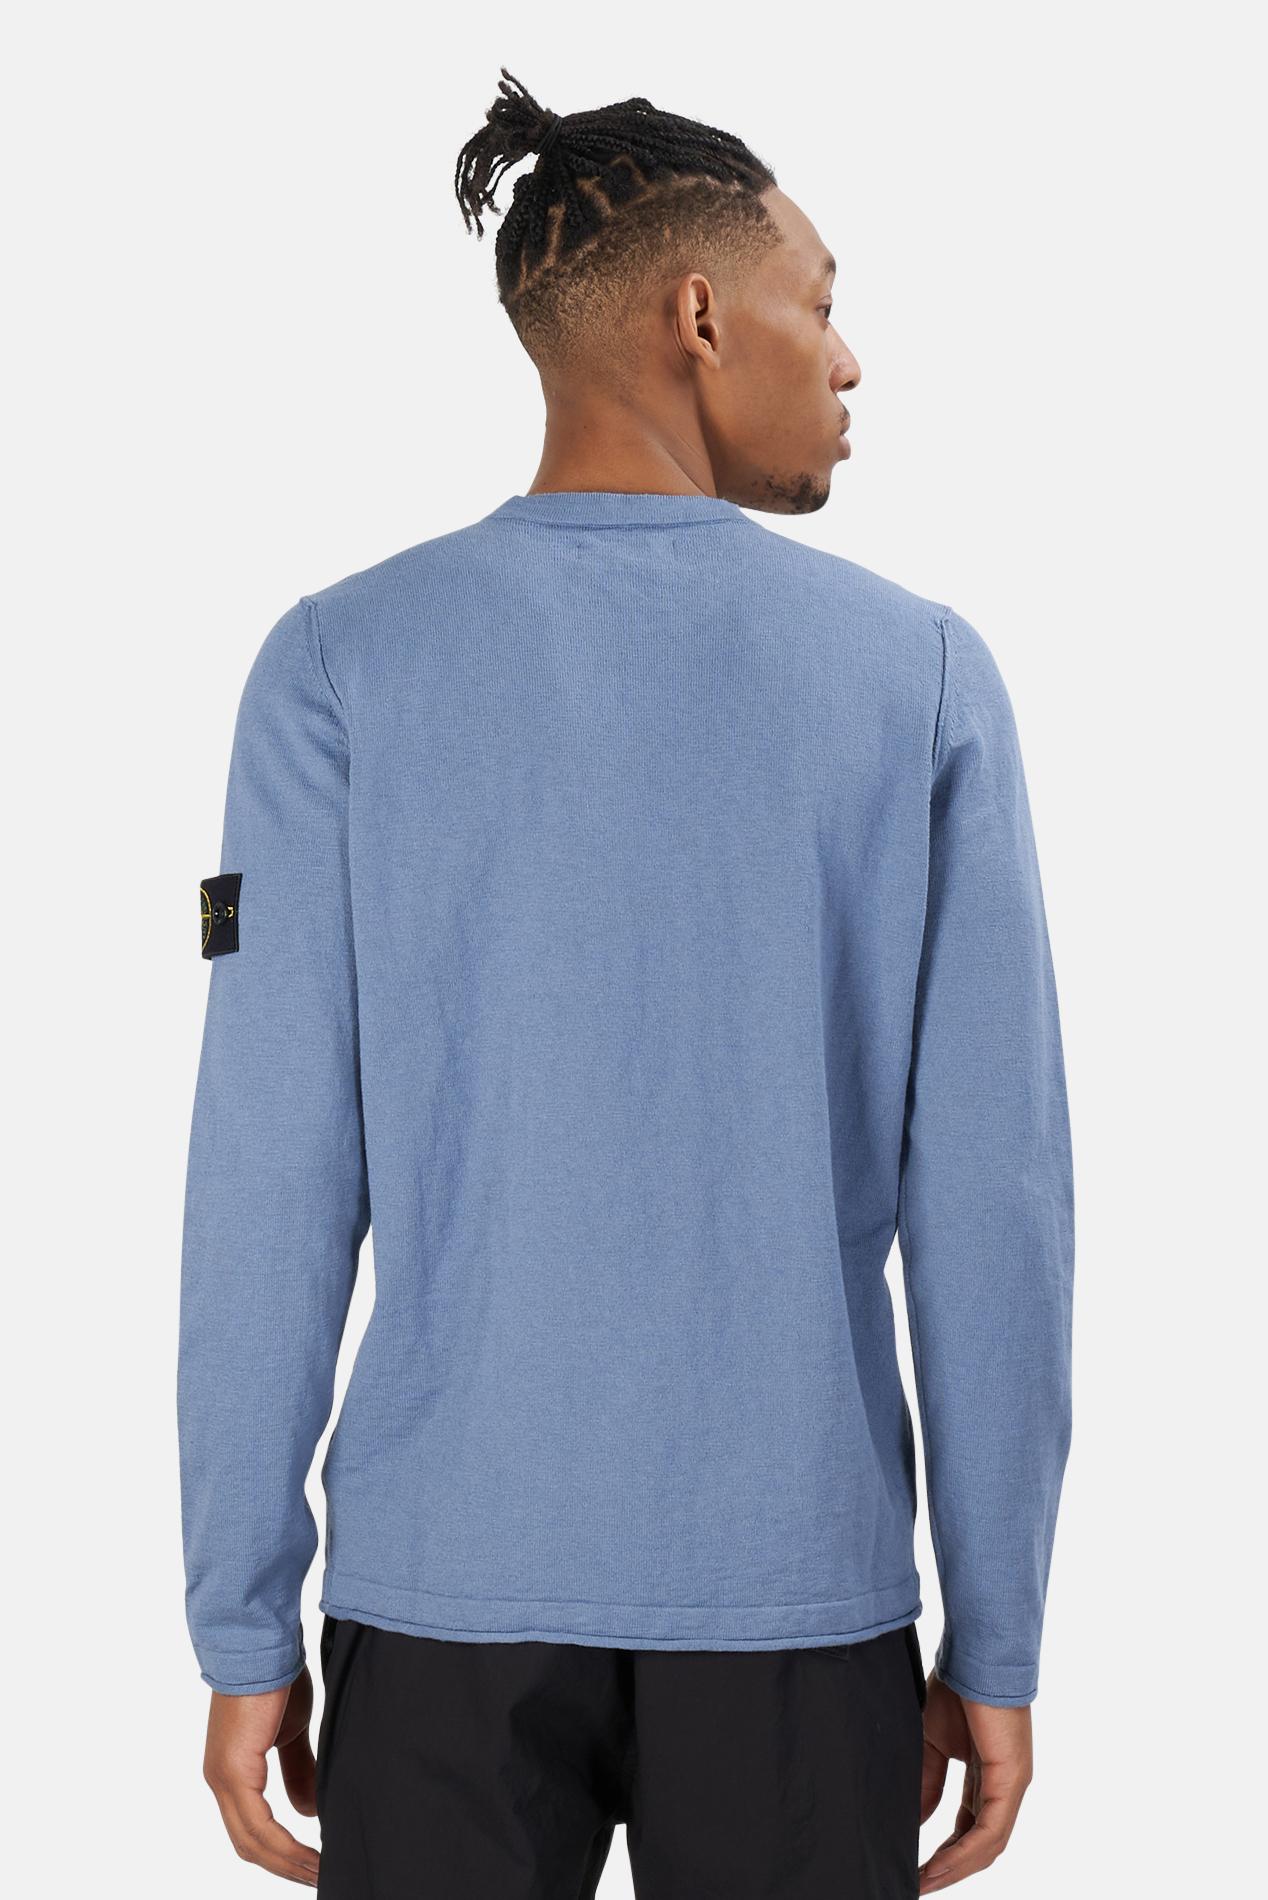 Stone Island Cotton Nylon Melange Crewneck Sweater in Blue for Men | Lyst